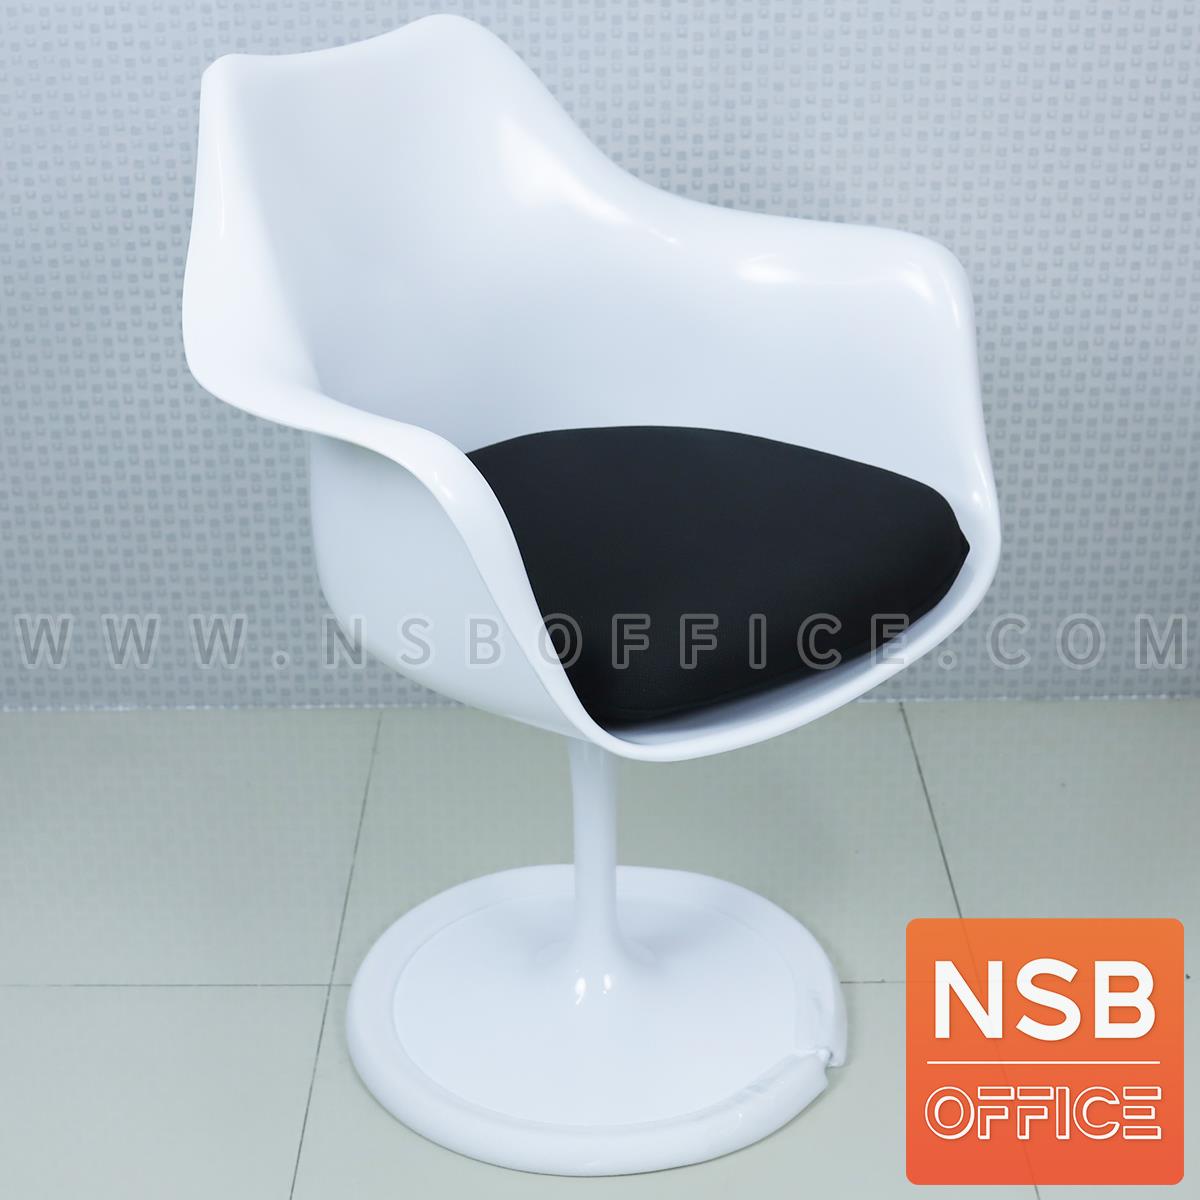 B29A119:เก้าอี้โมเดิร์นพลาสติก(ABS) รุ่น PP9233 ขนาด 68W cm. ขาอลูมิเนียม